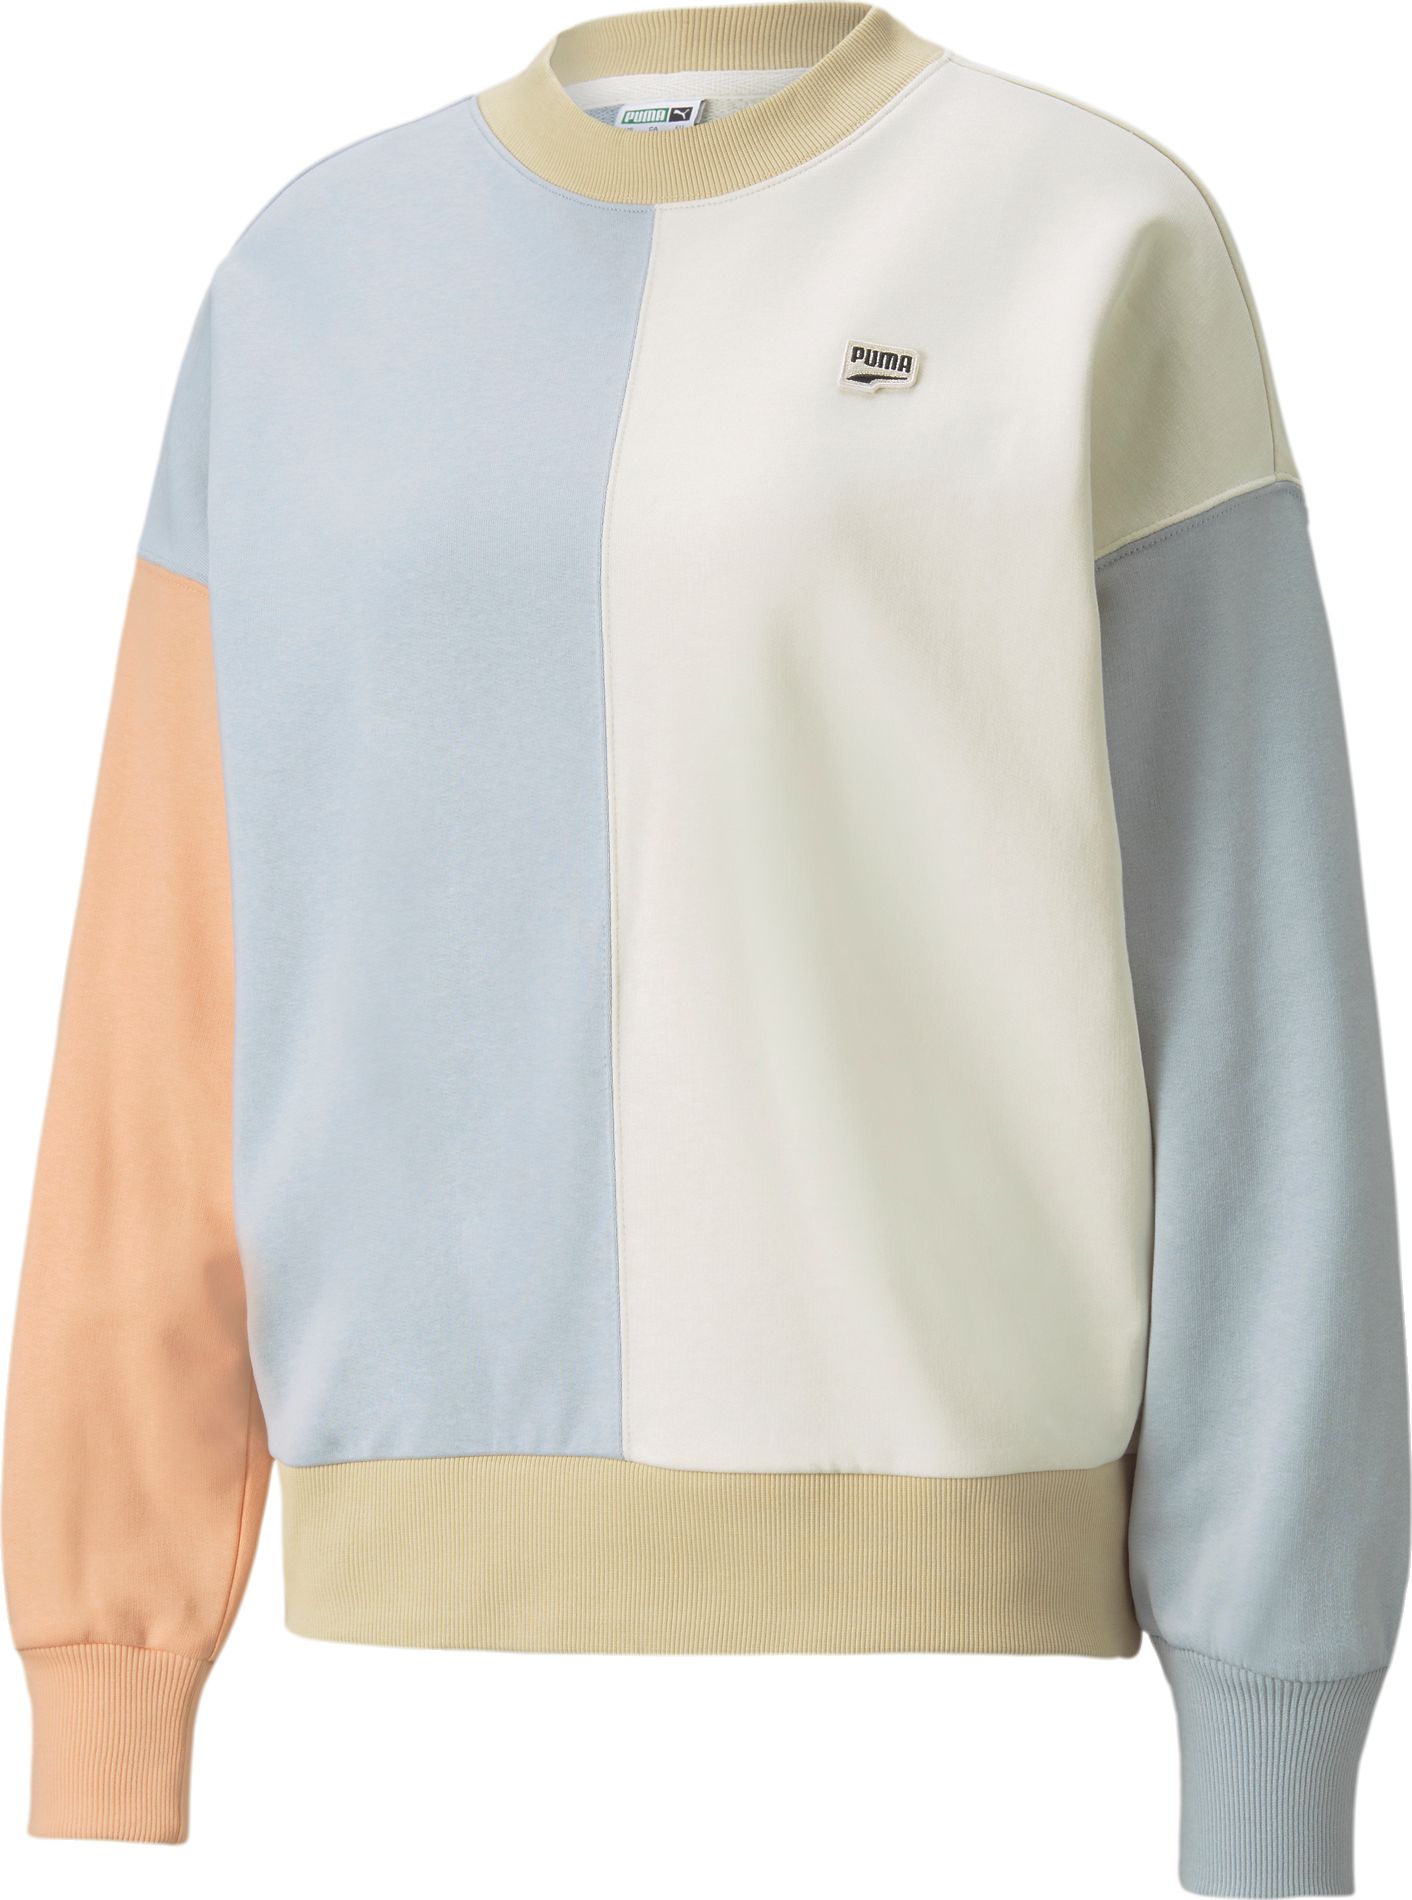 Puma / Women's Downtown French Terry Oversized Crewneck Sweatshirt